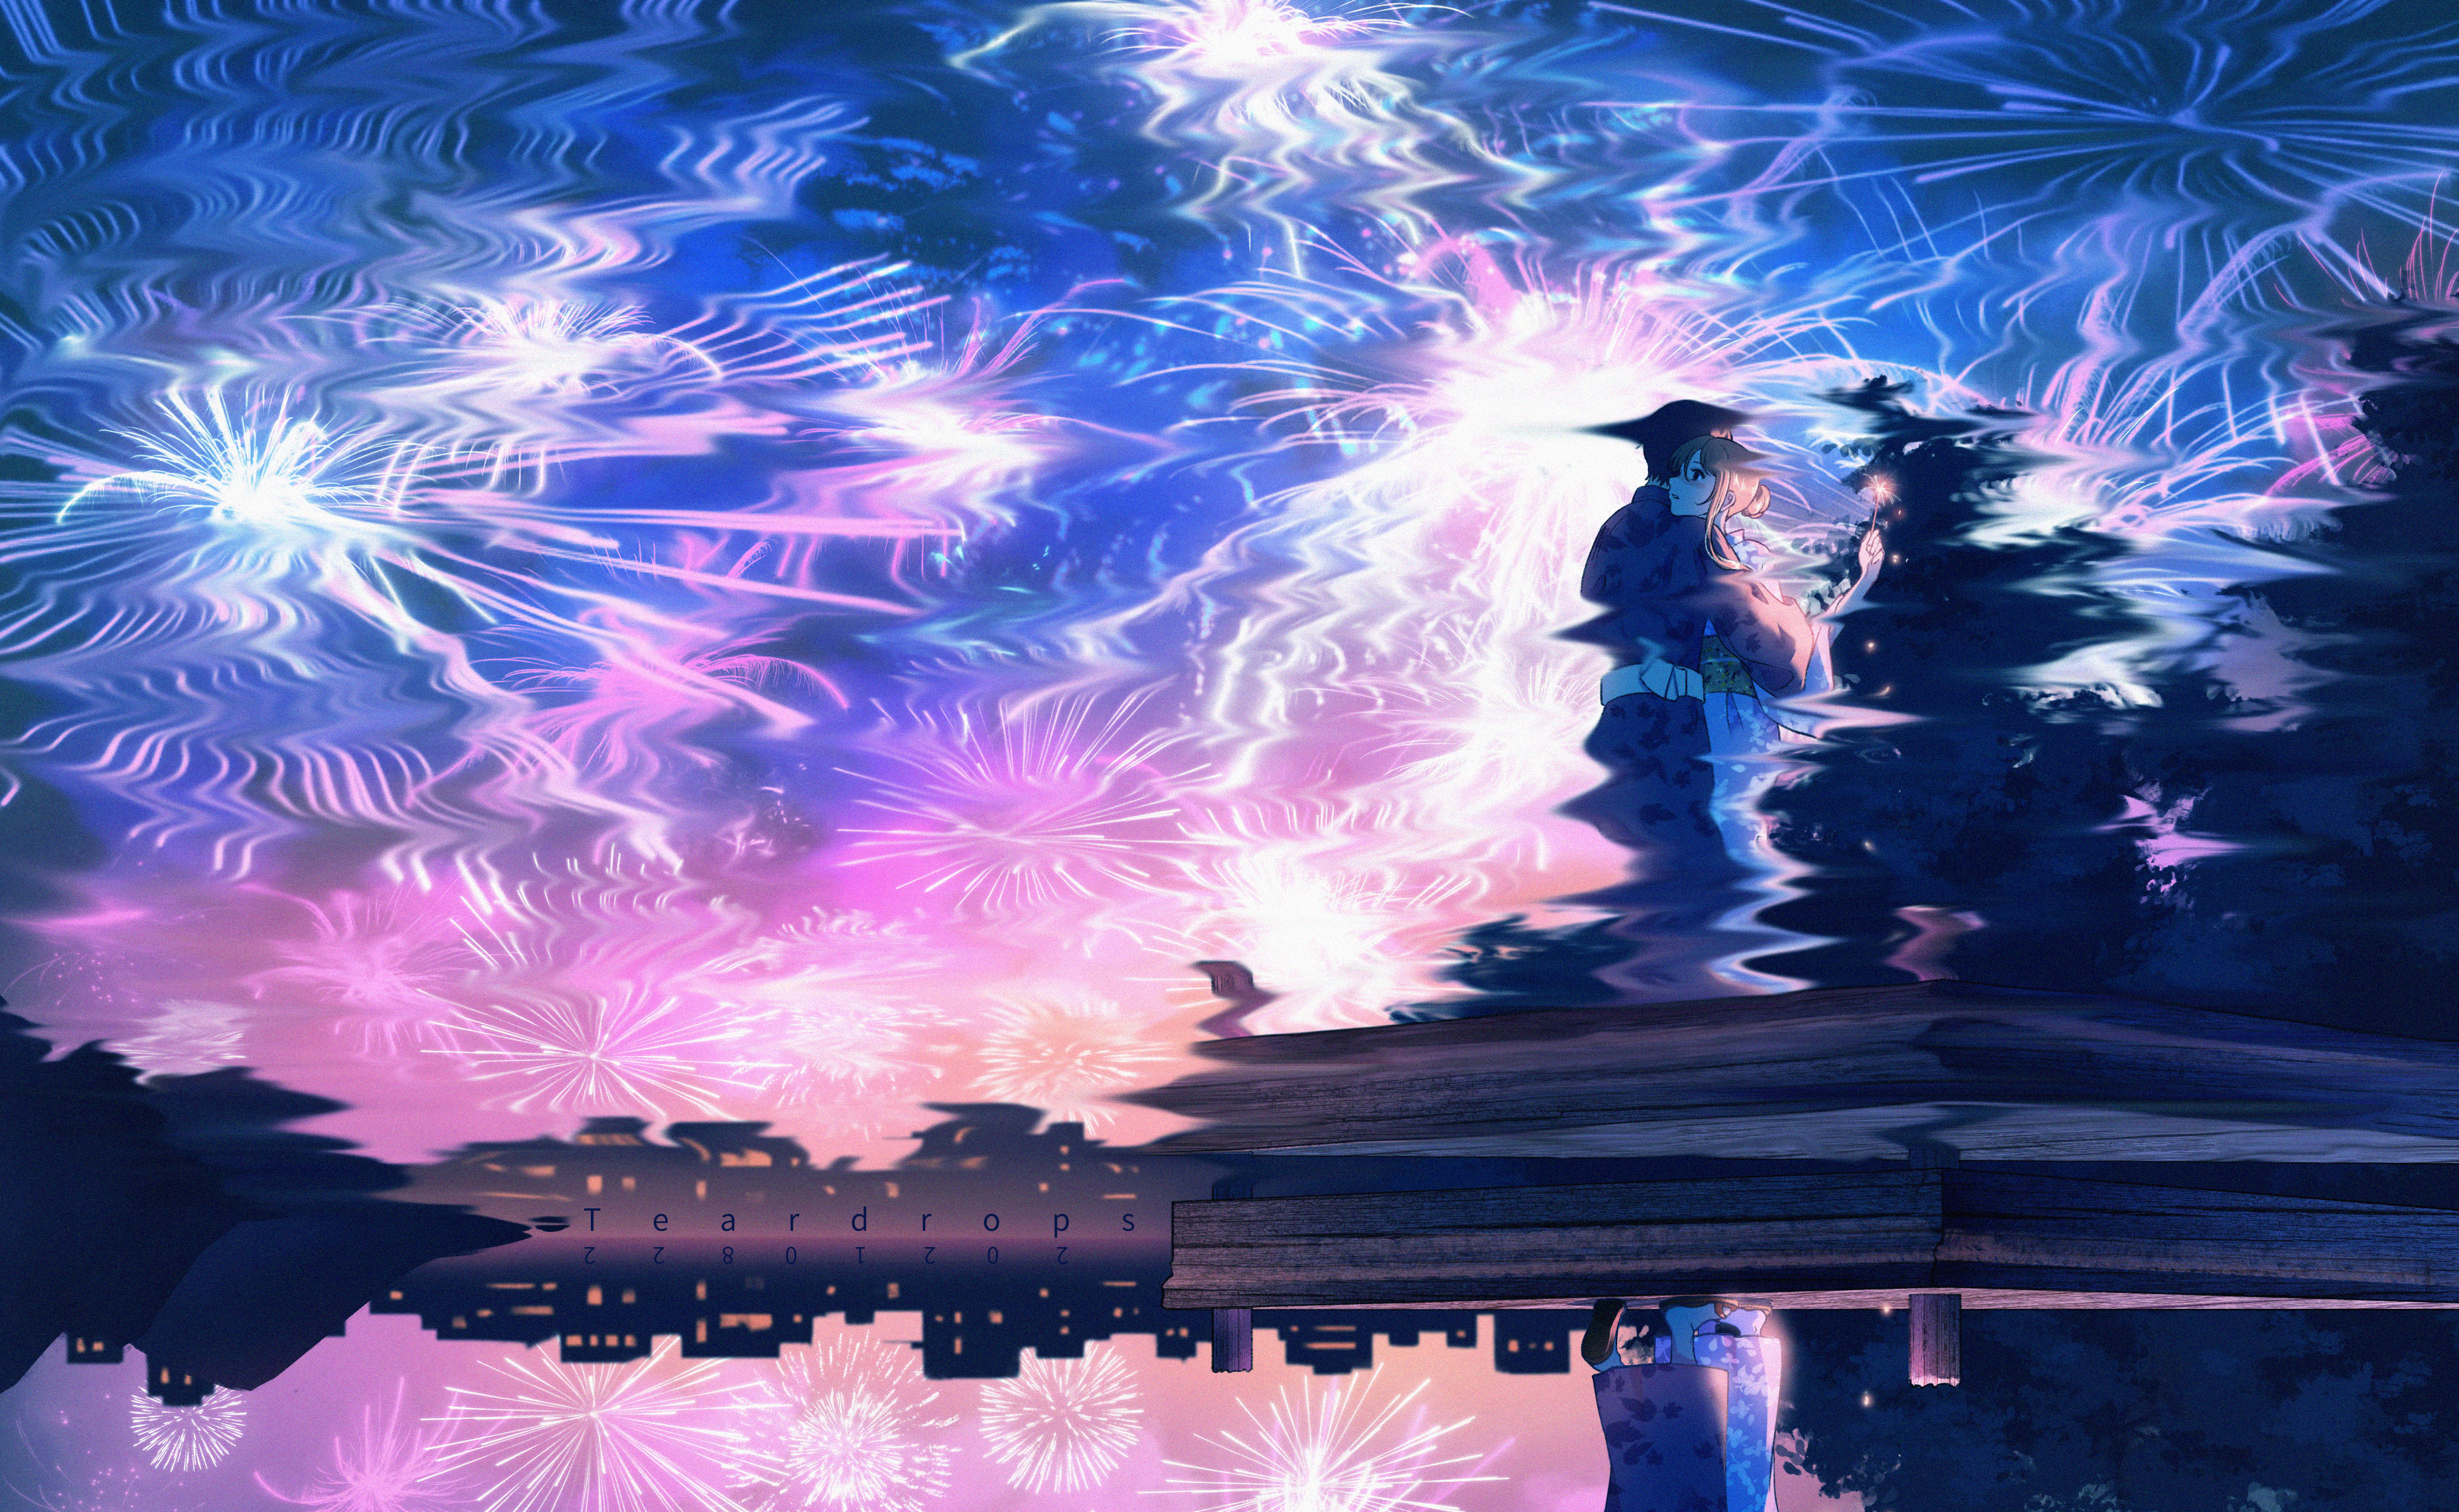 Anime 4066x2500 anime anime girls fireworks hugging hairbun standing reflection jetty water sky night anime boys trees